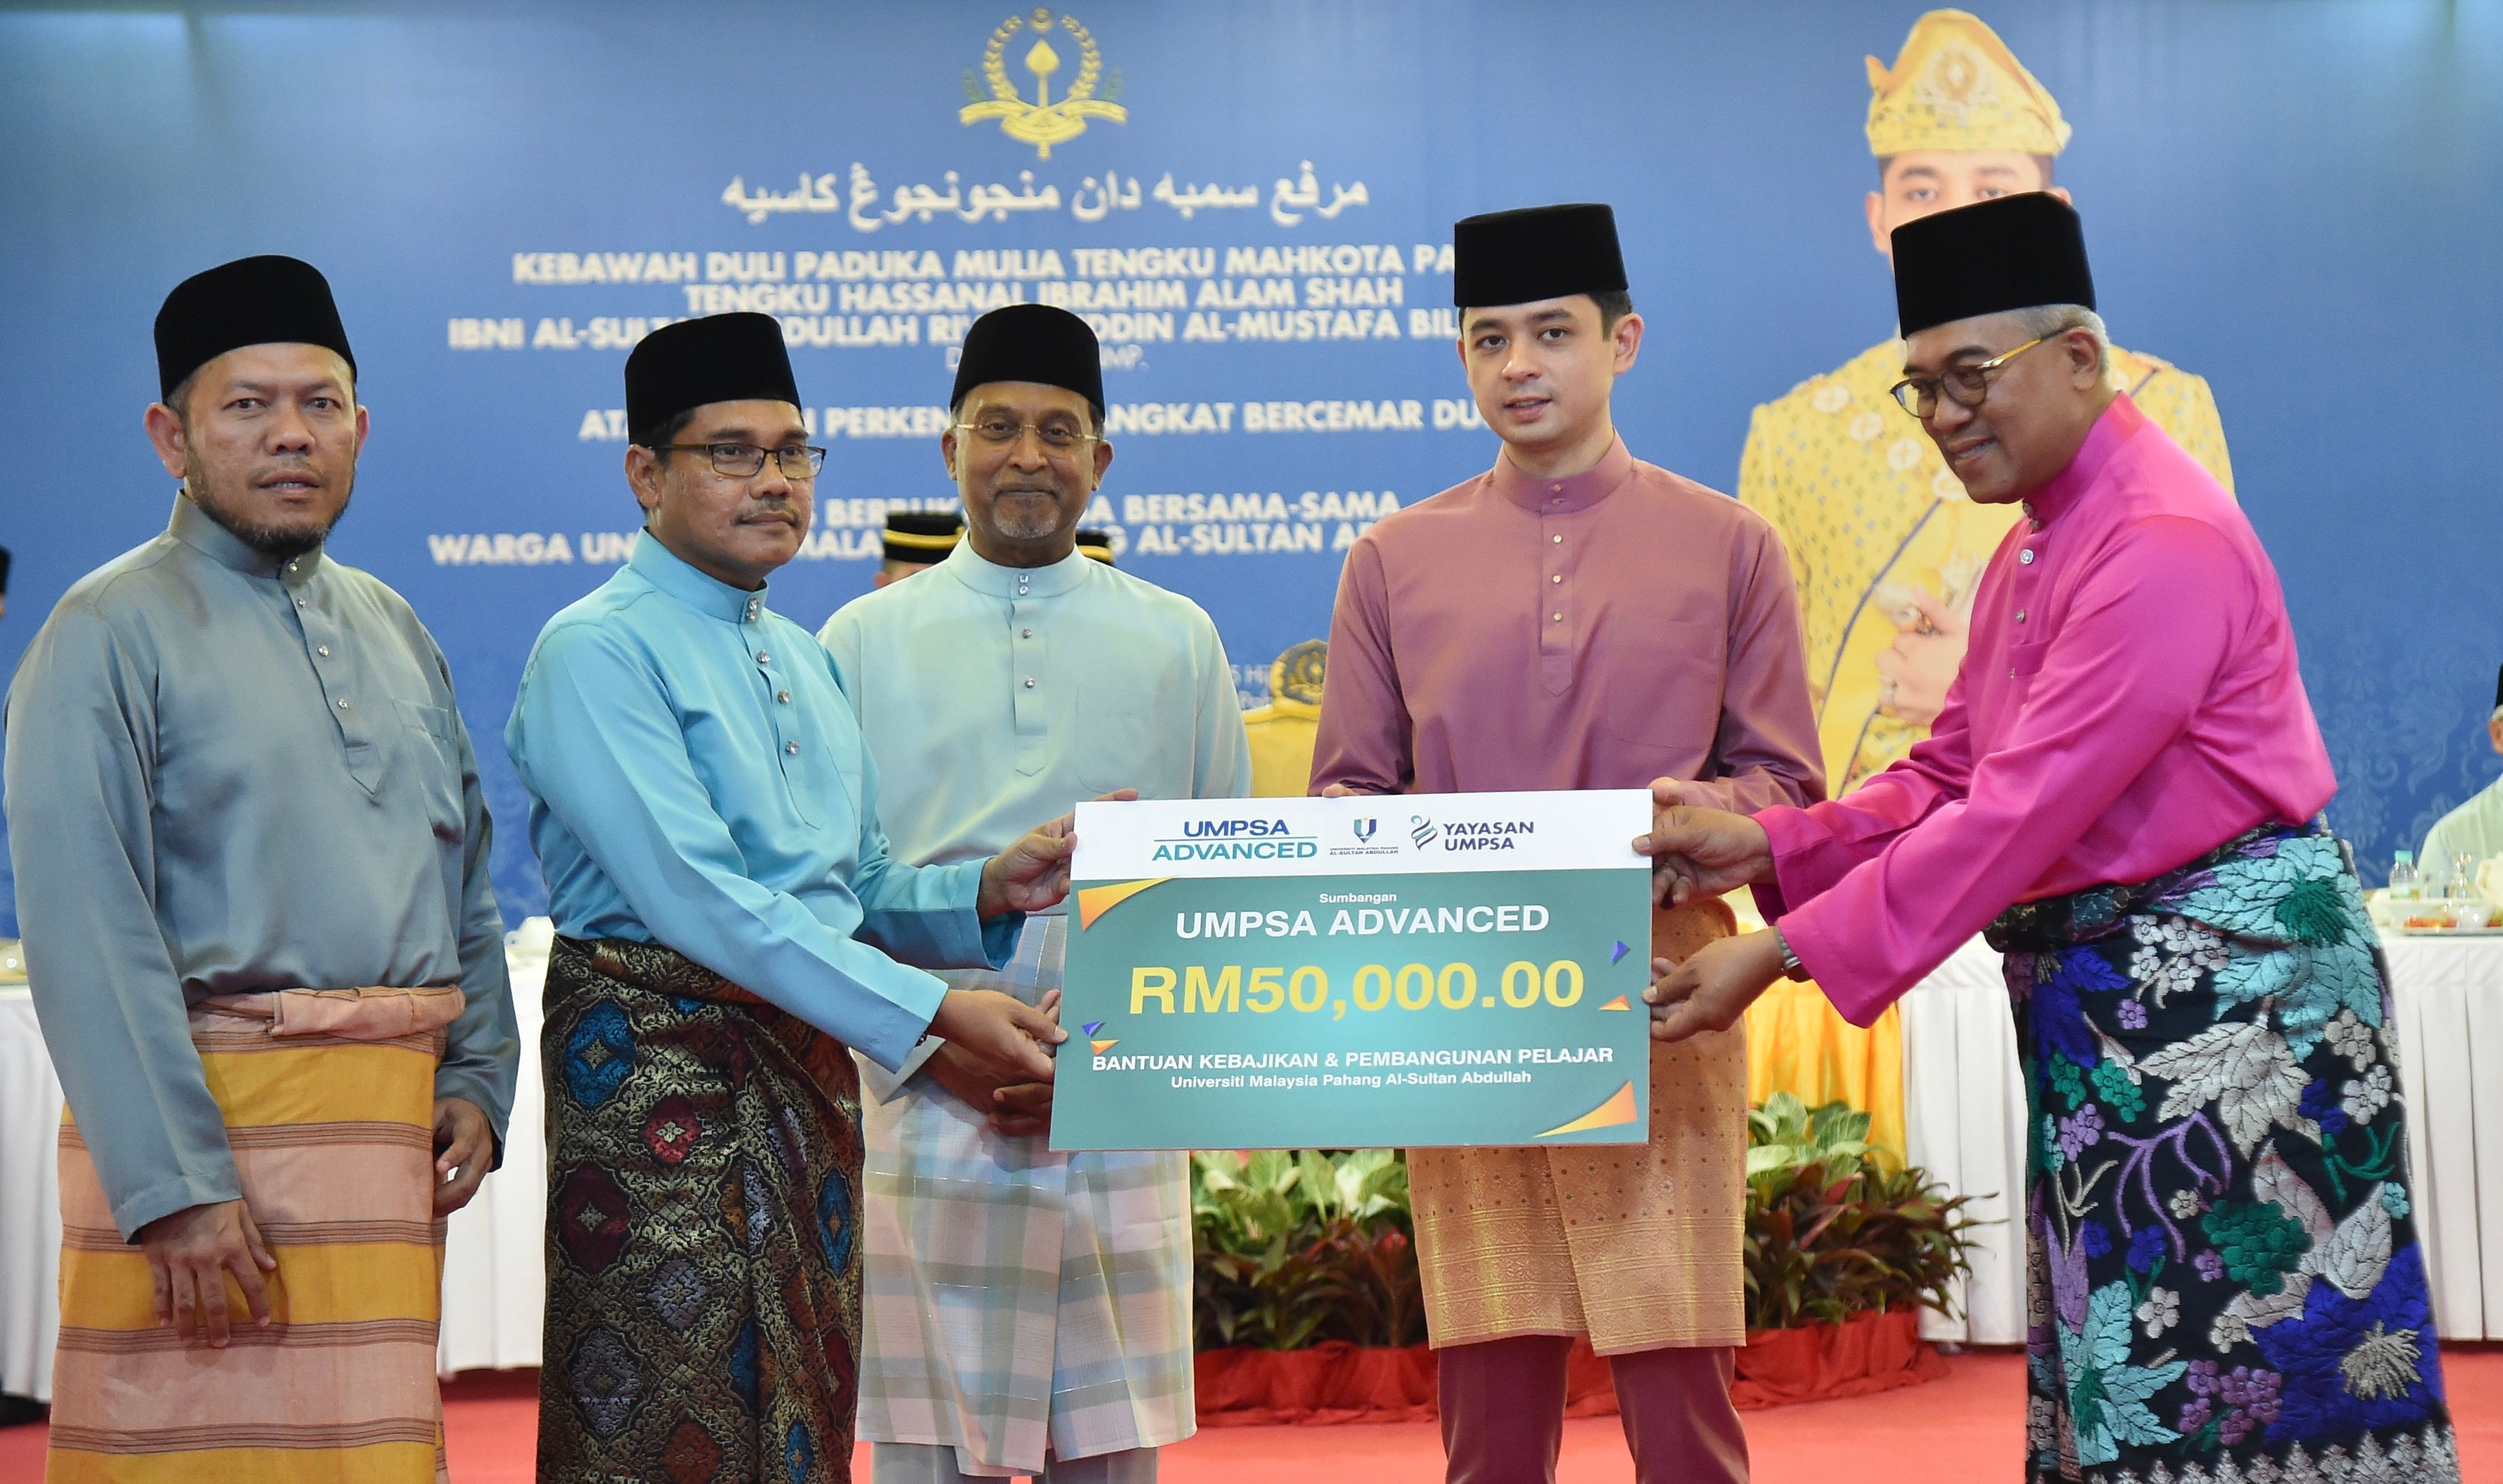 Tengku Mahkota Pahang Berbuka Bersama Menteri, Warga UMPSA